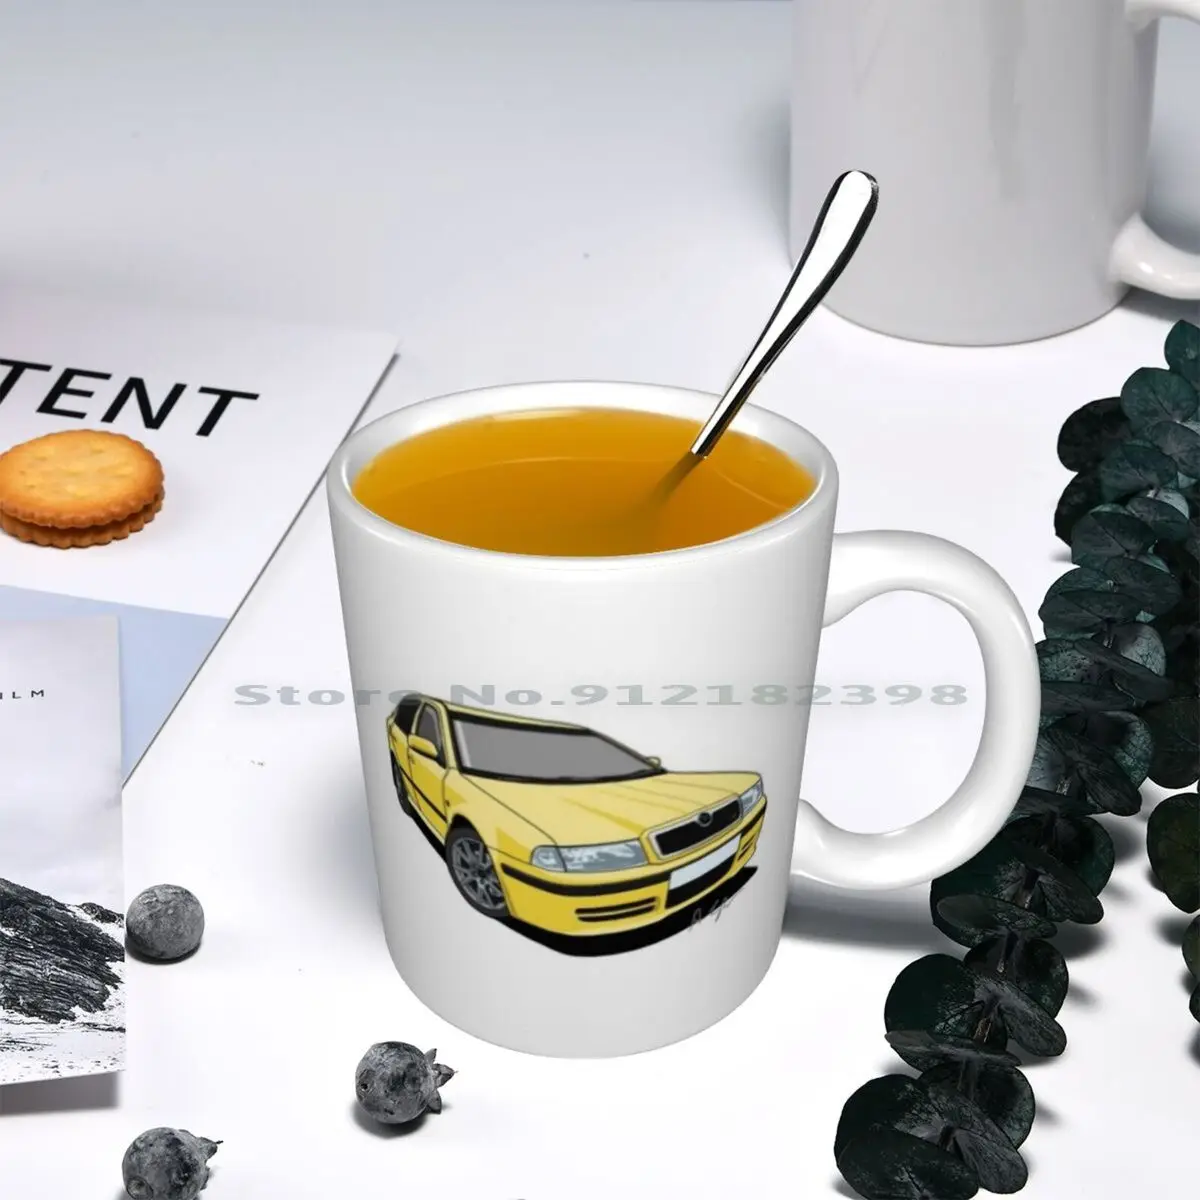 Skoda Octavia Vrs ( Rs ) Lemon Yellow Ceramic Mugs Coffee Cups Milk Tea Mug Cars Skoda Skoda Octavia Rs Vrs Motor Nation images - 6